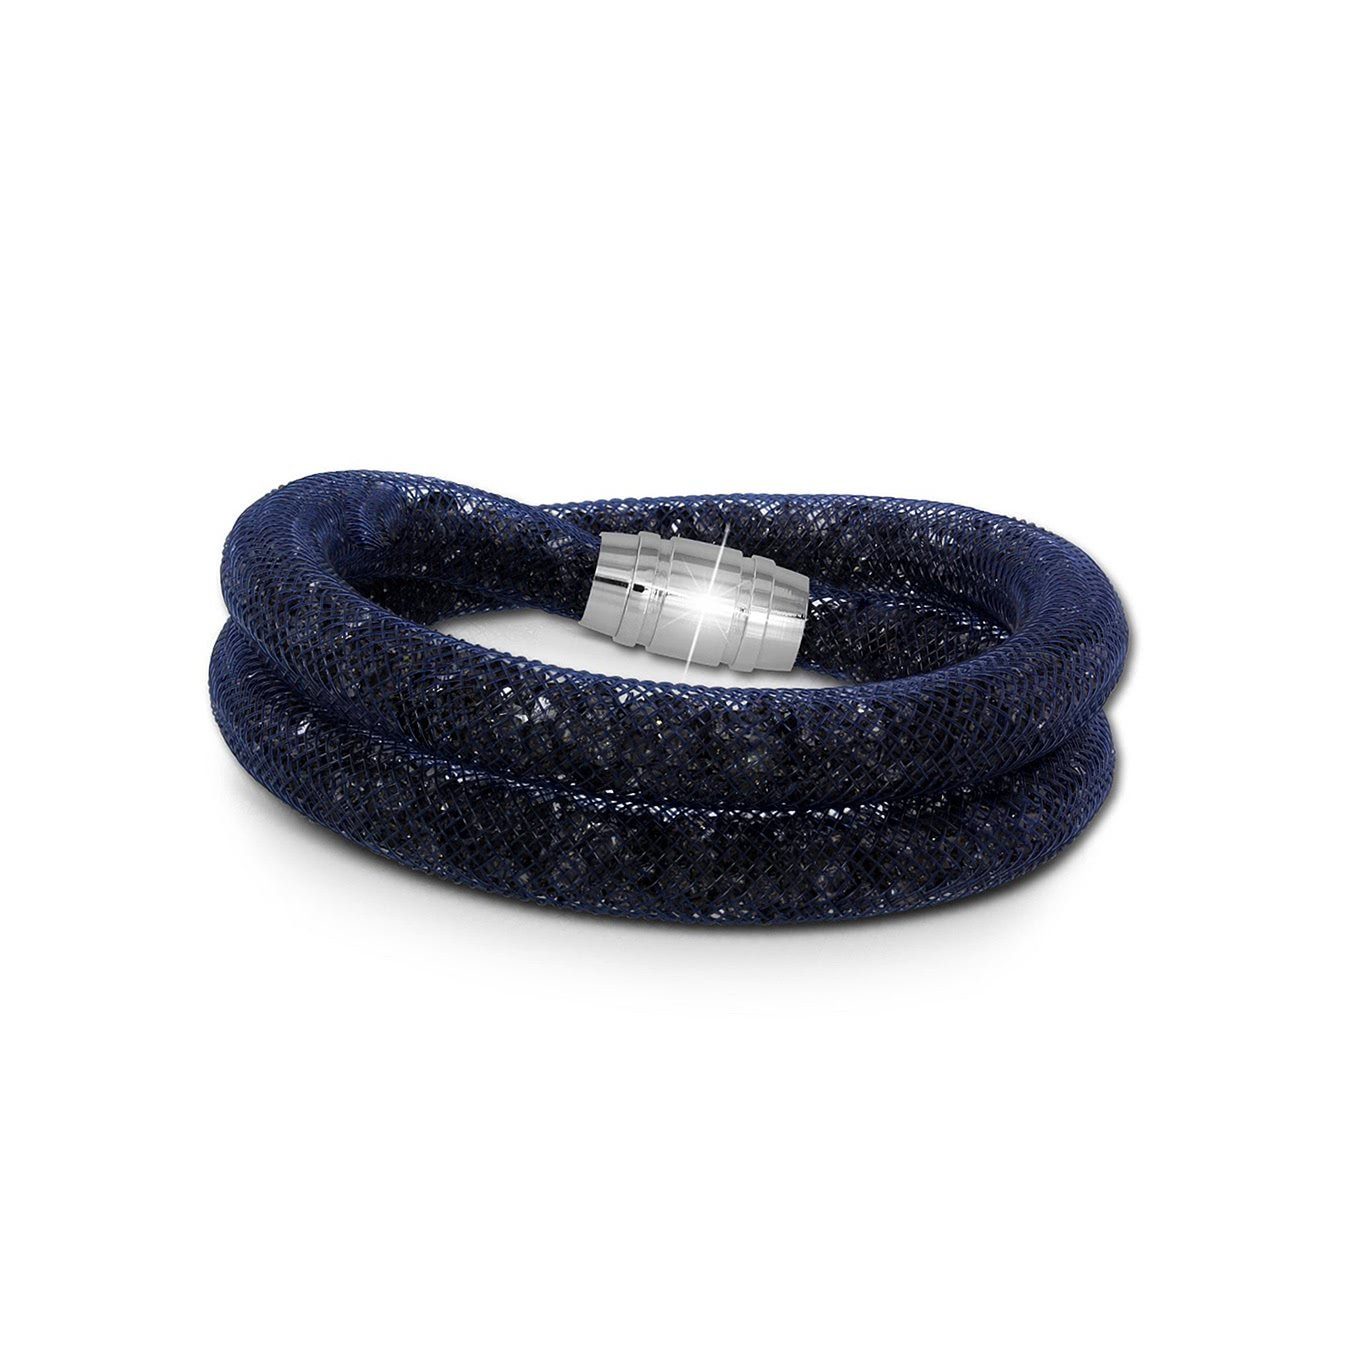 SilberDream Edelstahlarmband SilberDream Armband blau Arm-Schmuck (Armband), Damenarmband mit Edelstahl-Verschluss, Farbe: schwarz, grau, blau